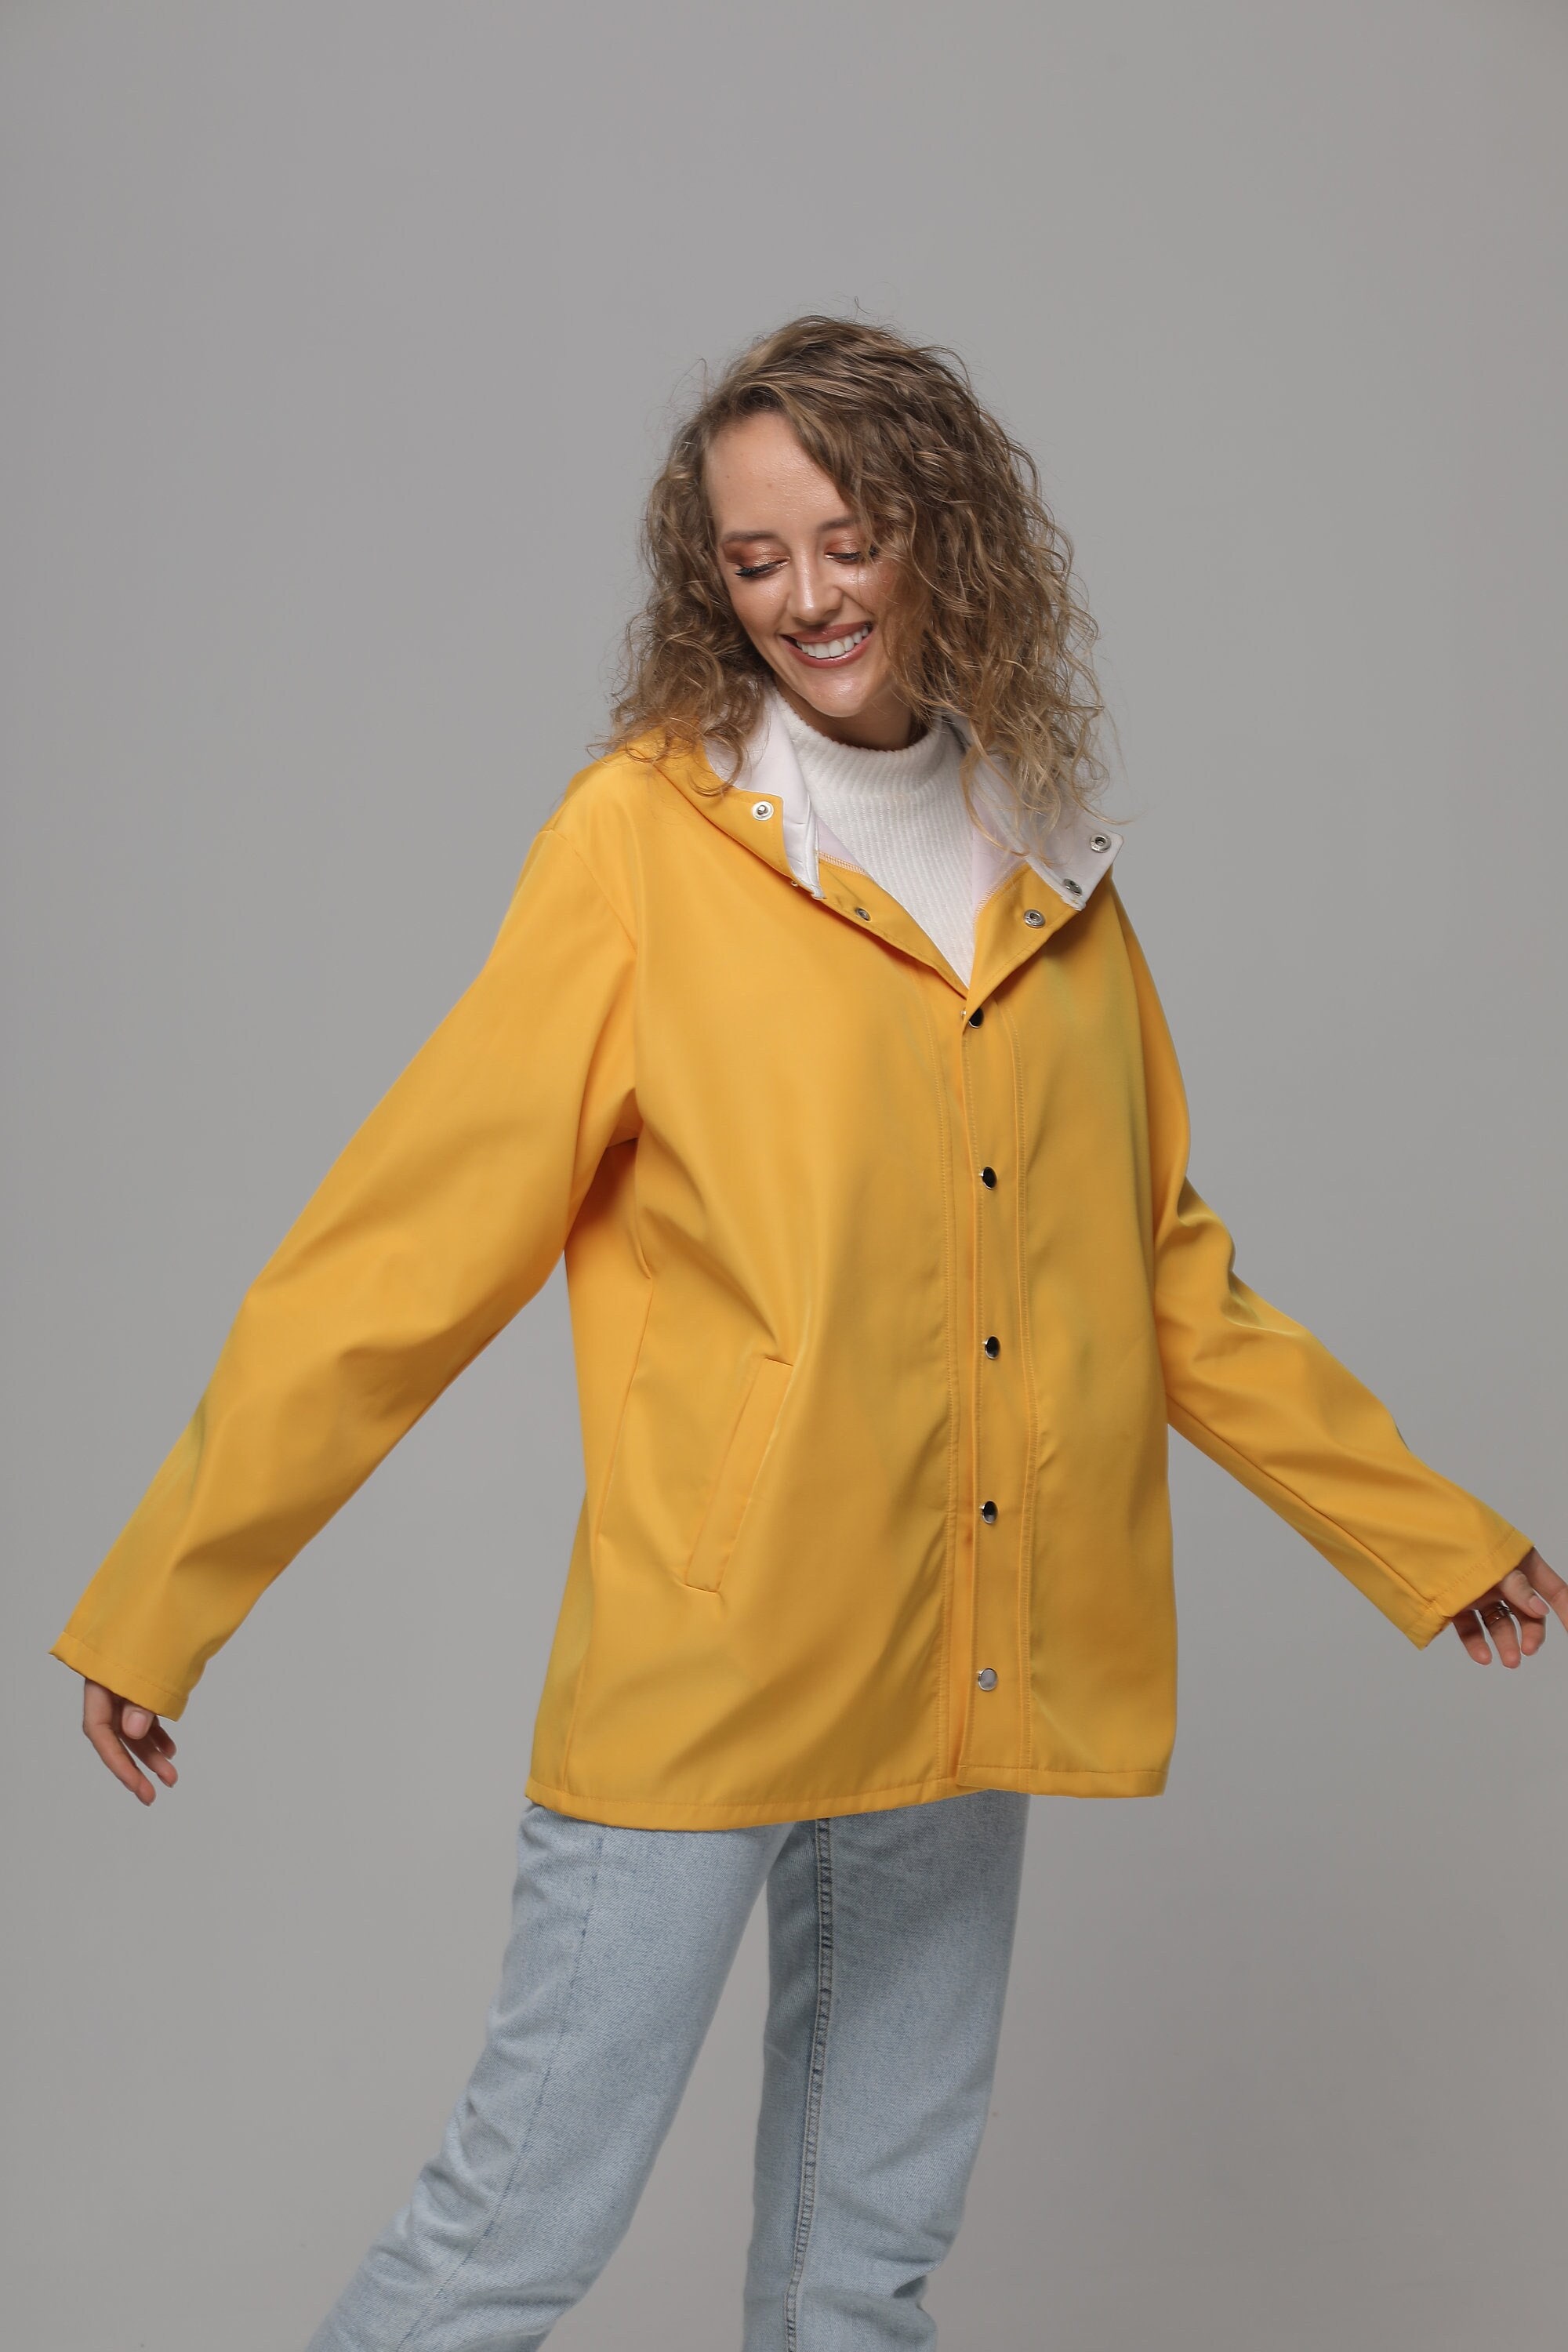 Vintage 1980s Yellow Fishing Rain Jacket Coat Rubber Heavy Duty International Sportswear Made in USA Newport Maine